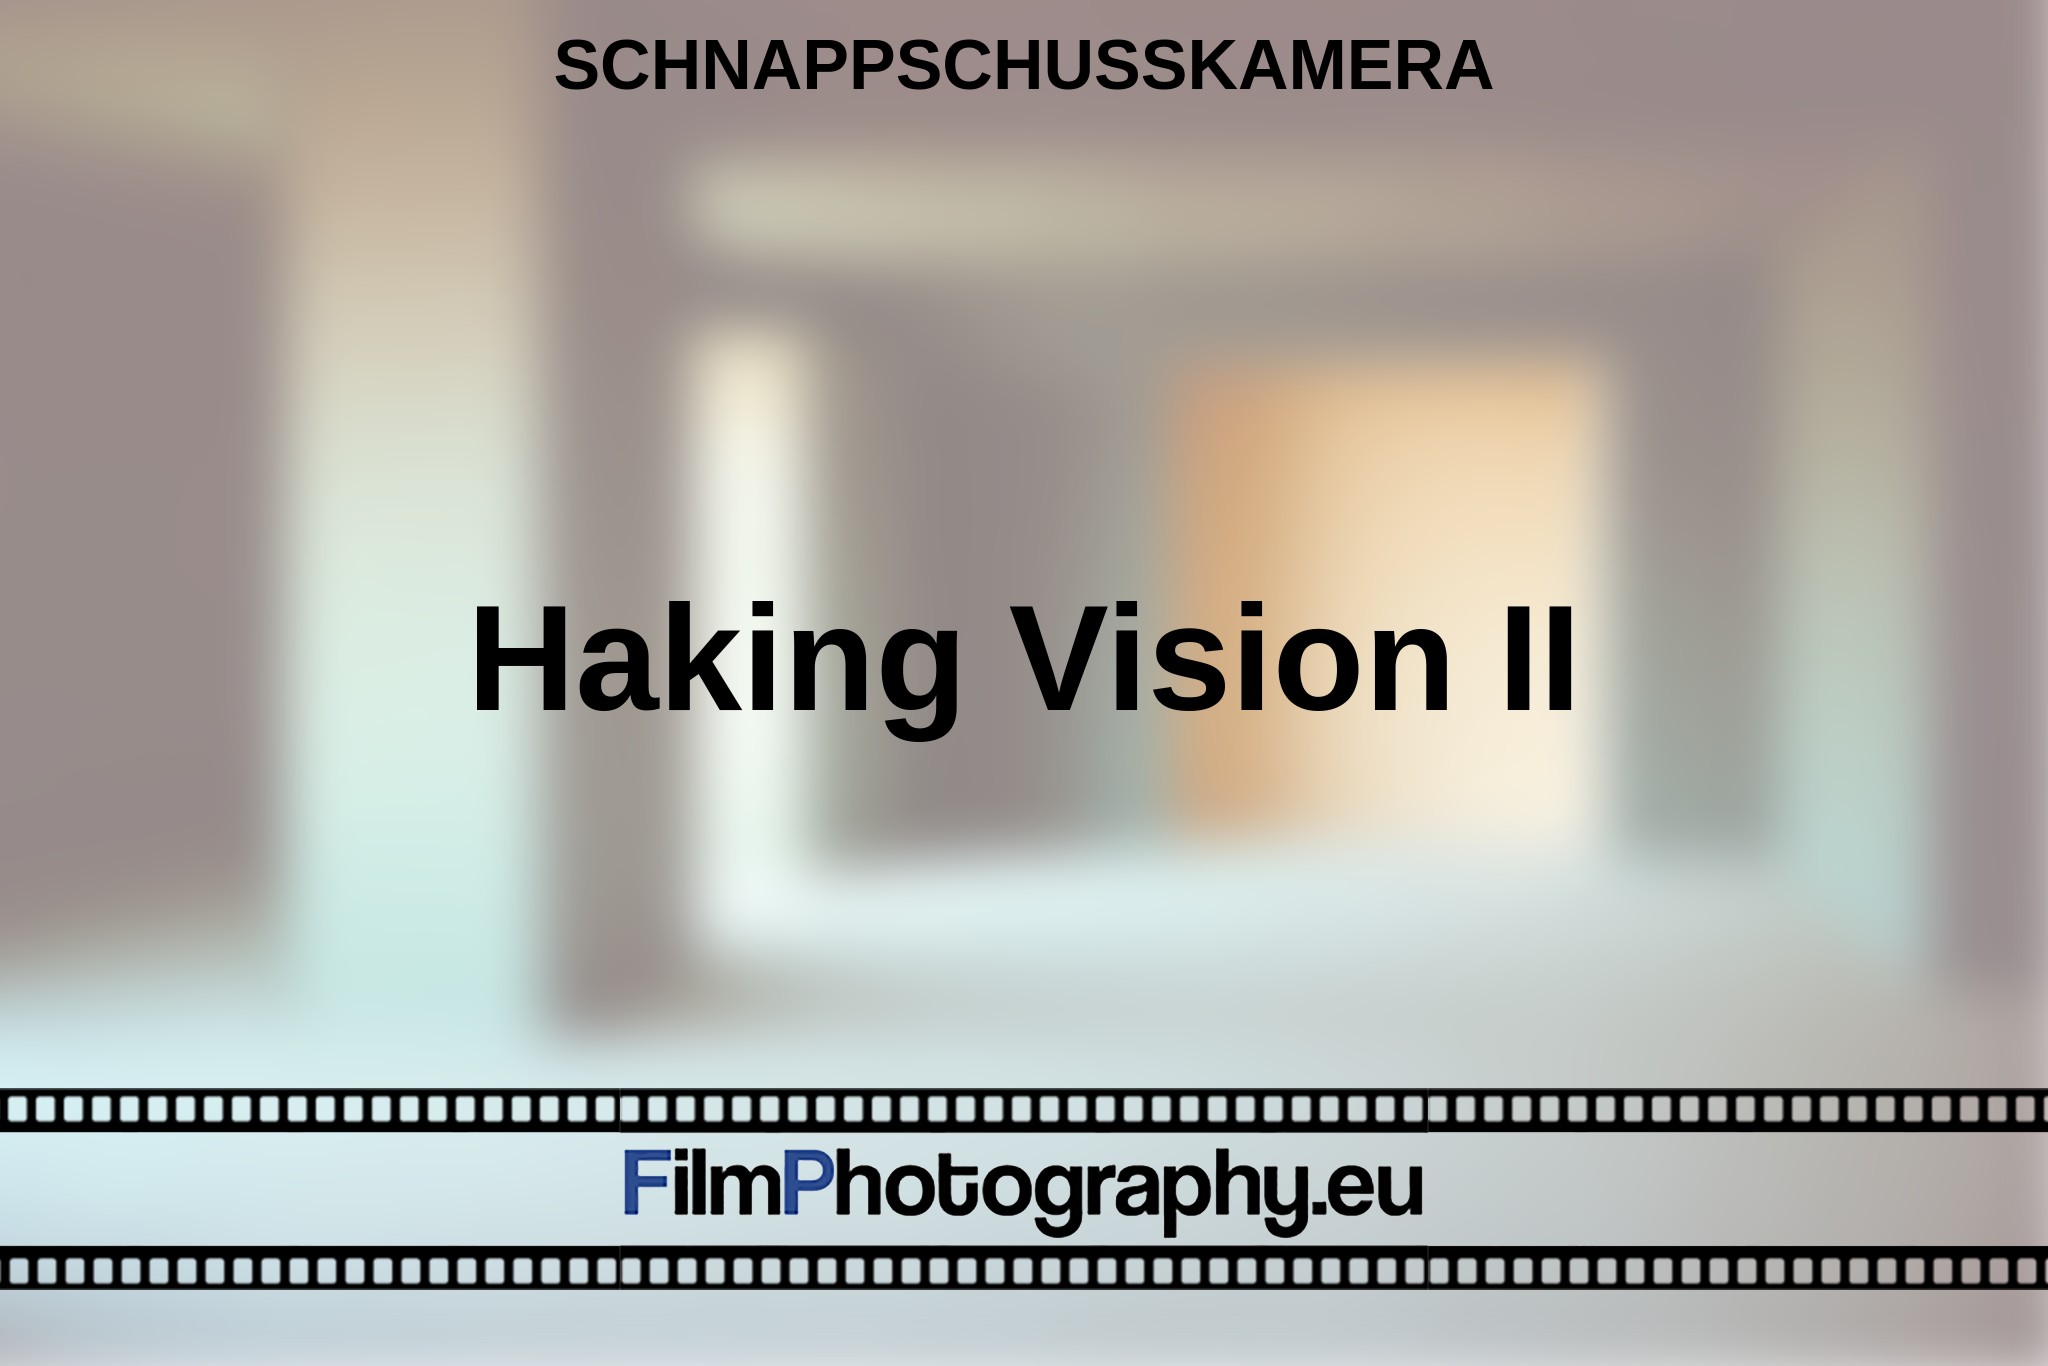 haking-vision-ii-schnappschusskamera-bnv.jpg